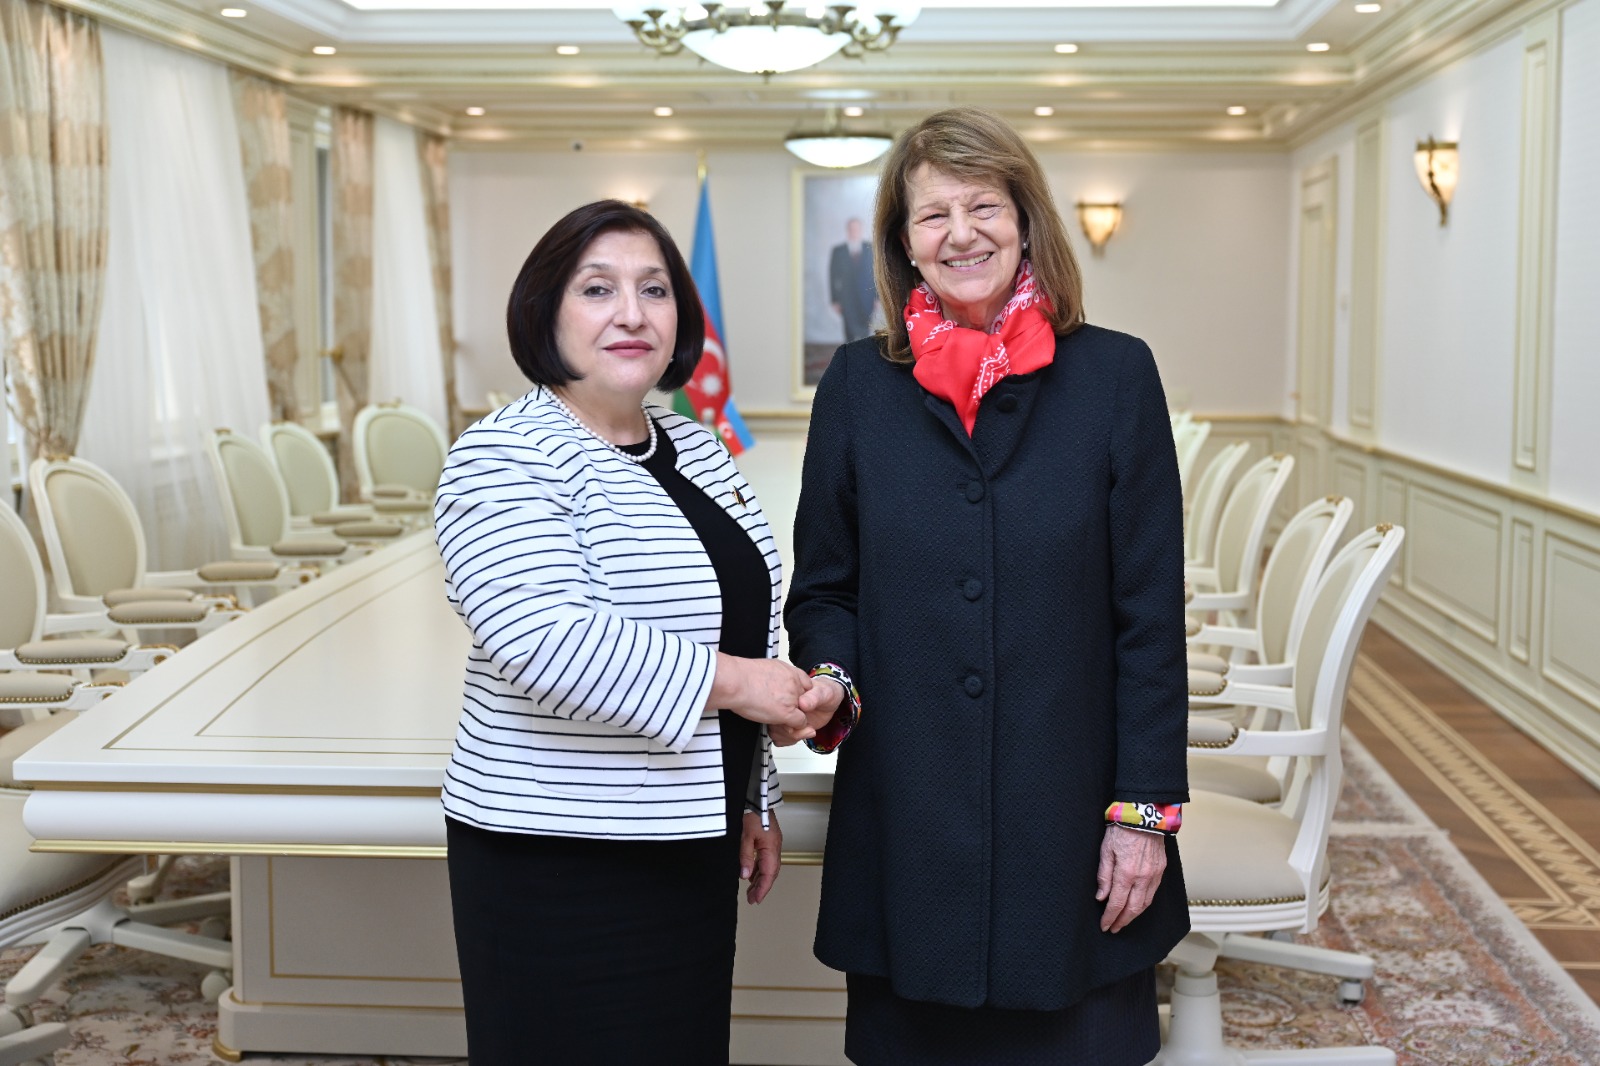 Chair of Milli Majlis Speaks with British PM’s Trade Envoy on Azerbaijan